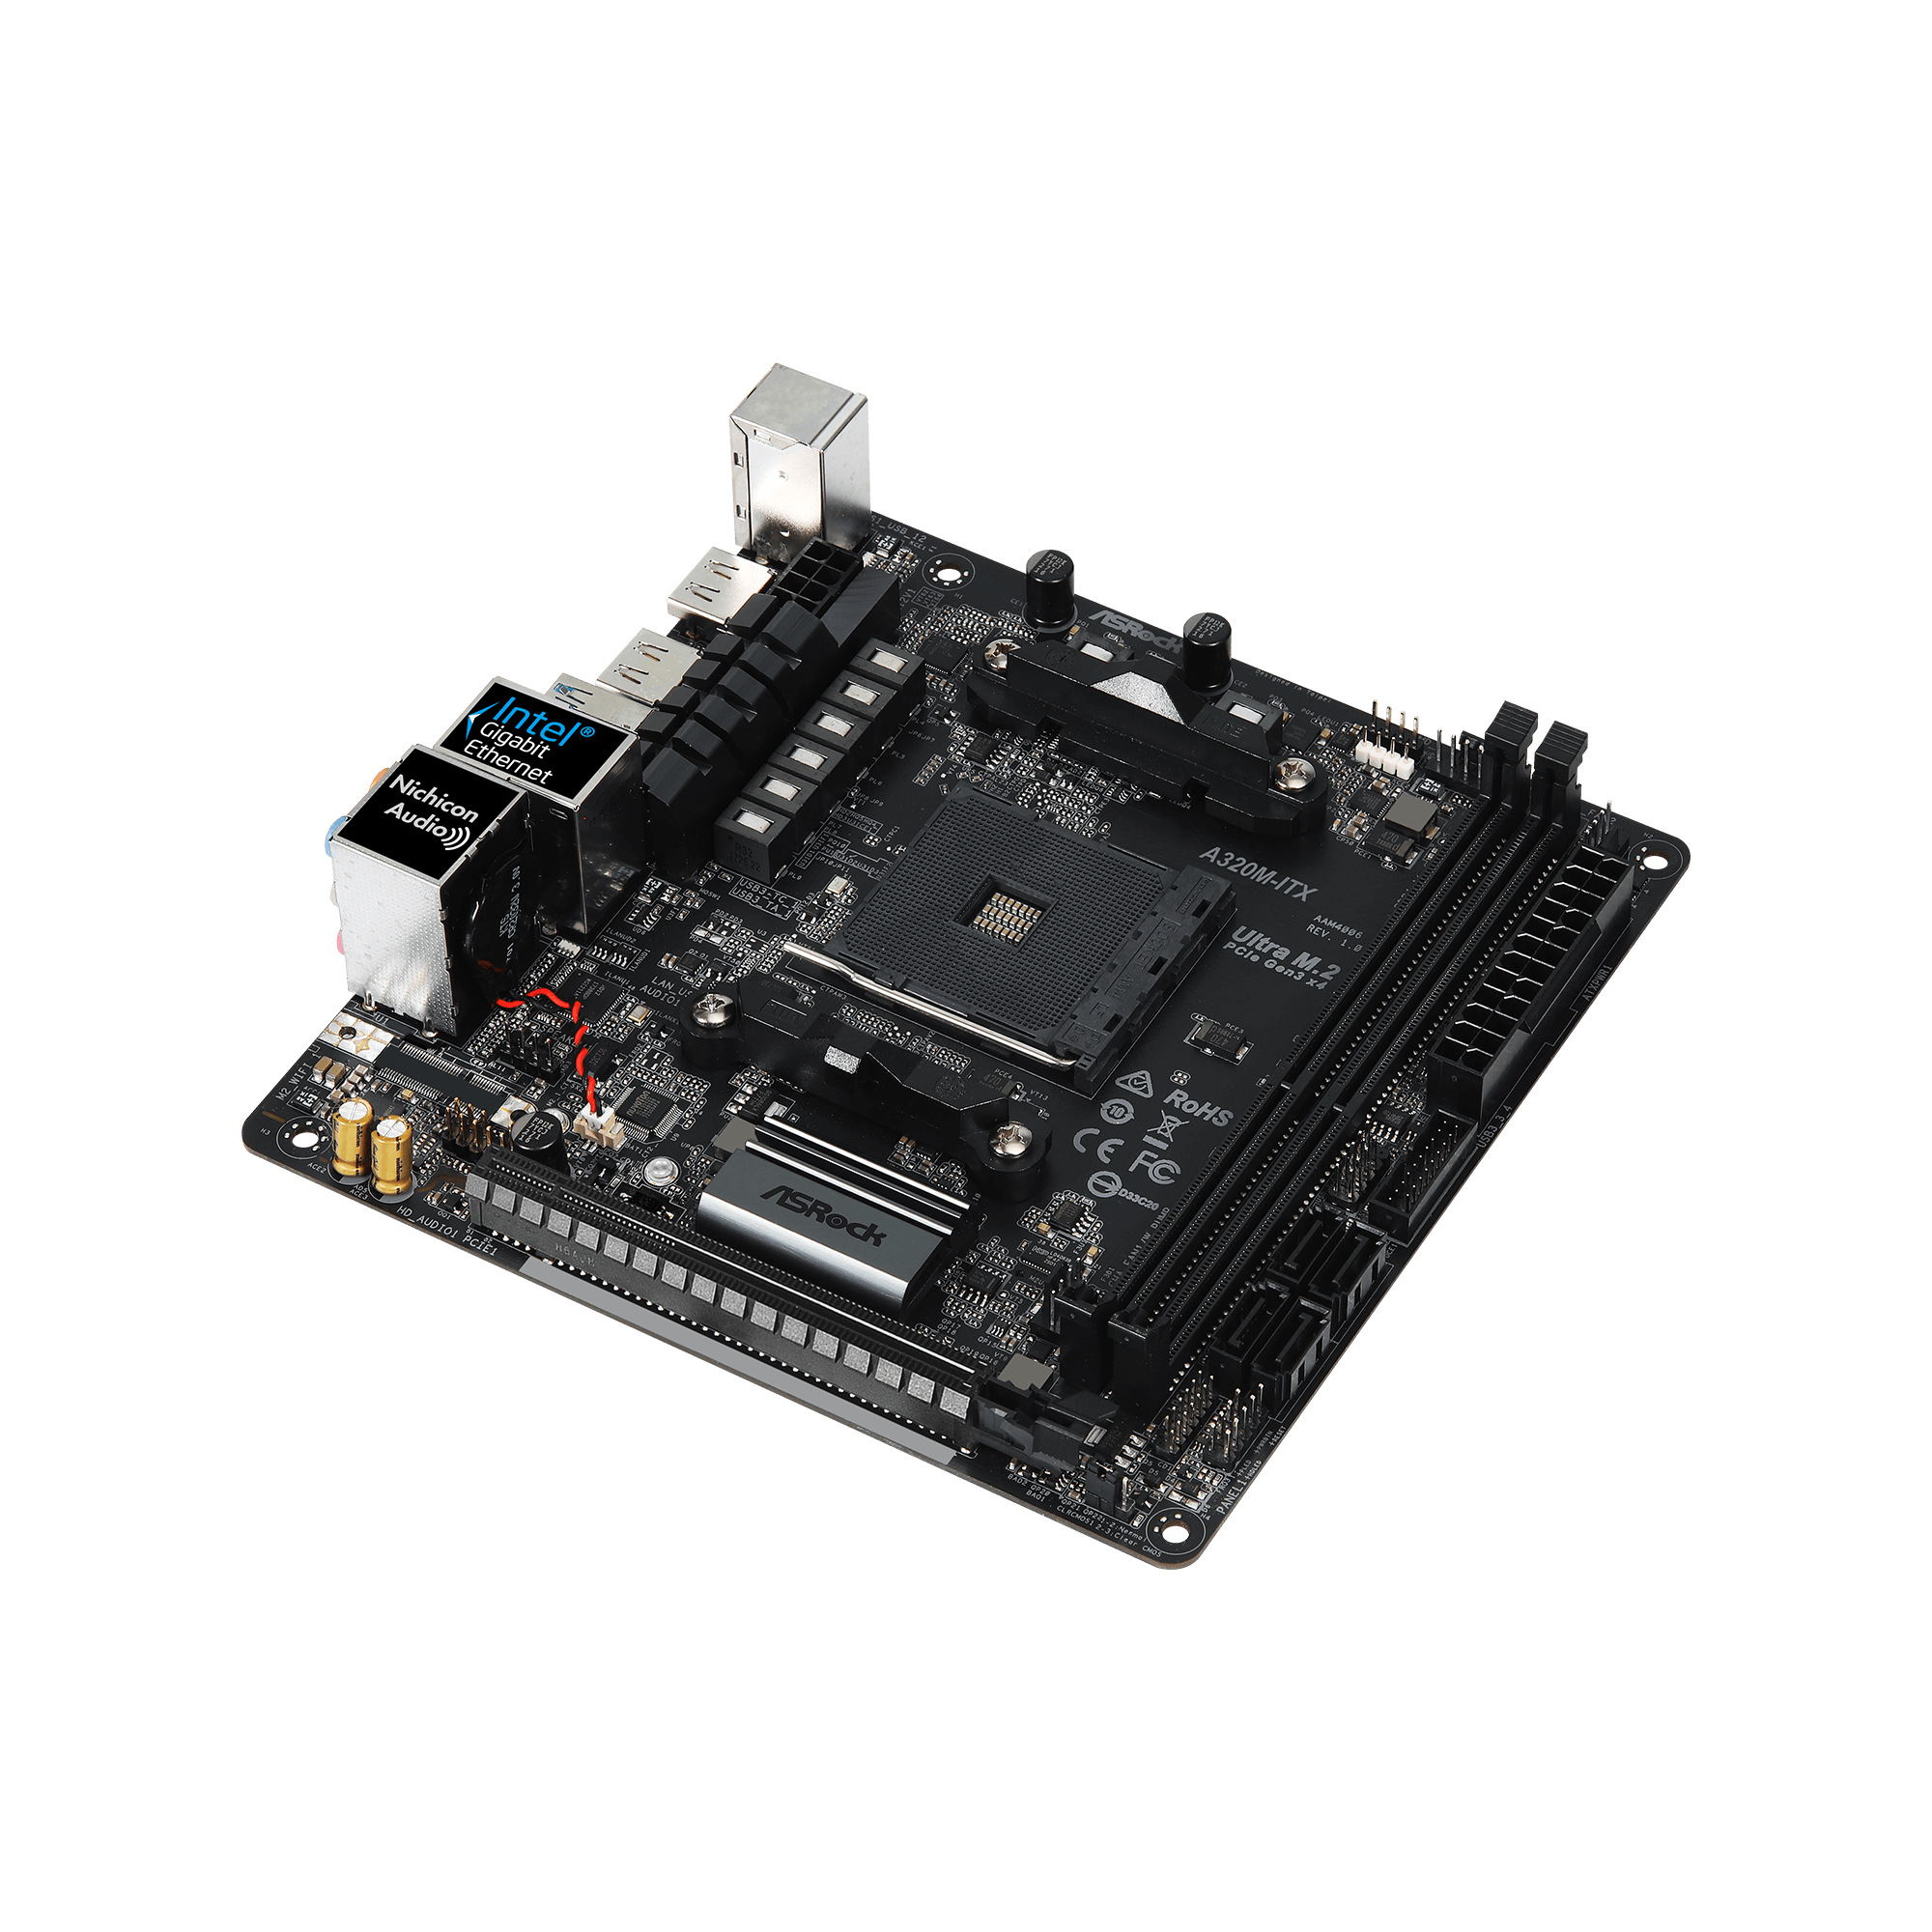 ASRock AMD A320M-ITX mini ITX マザーボード